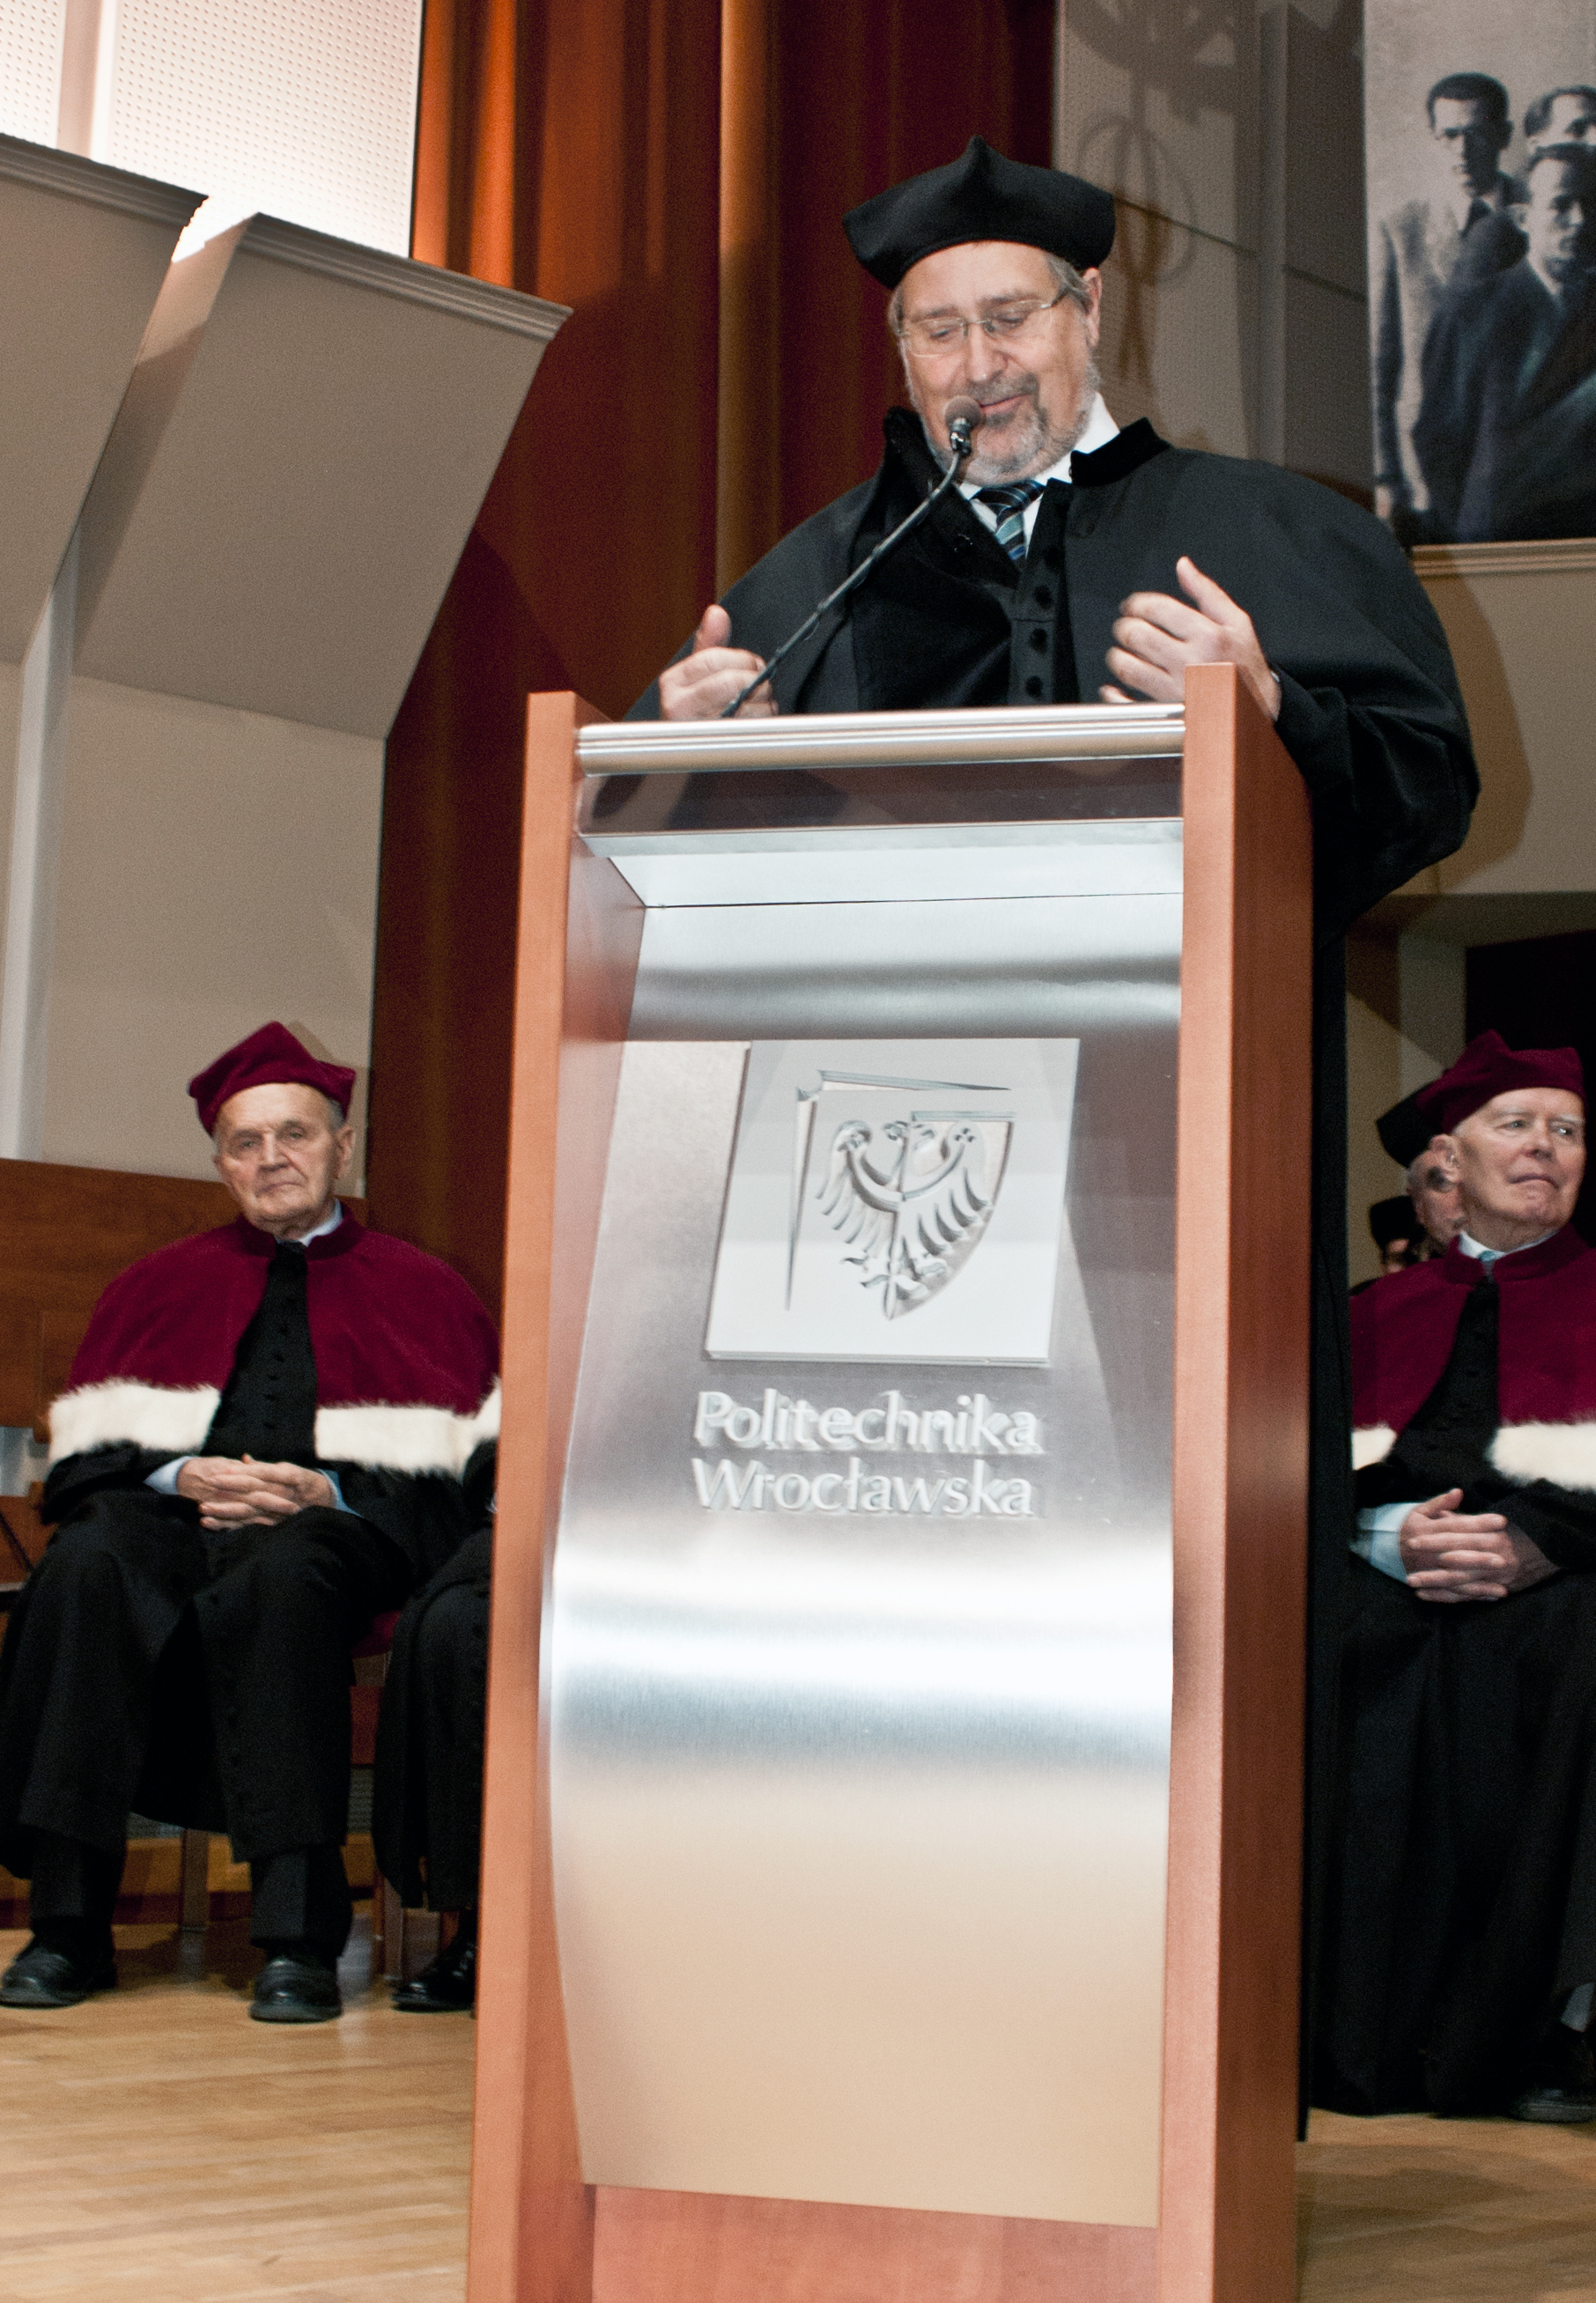 Prof. Dr.-Ing. habil. Eckhard Beyer during his acceptance speech